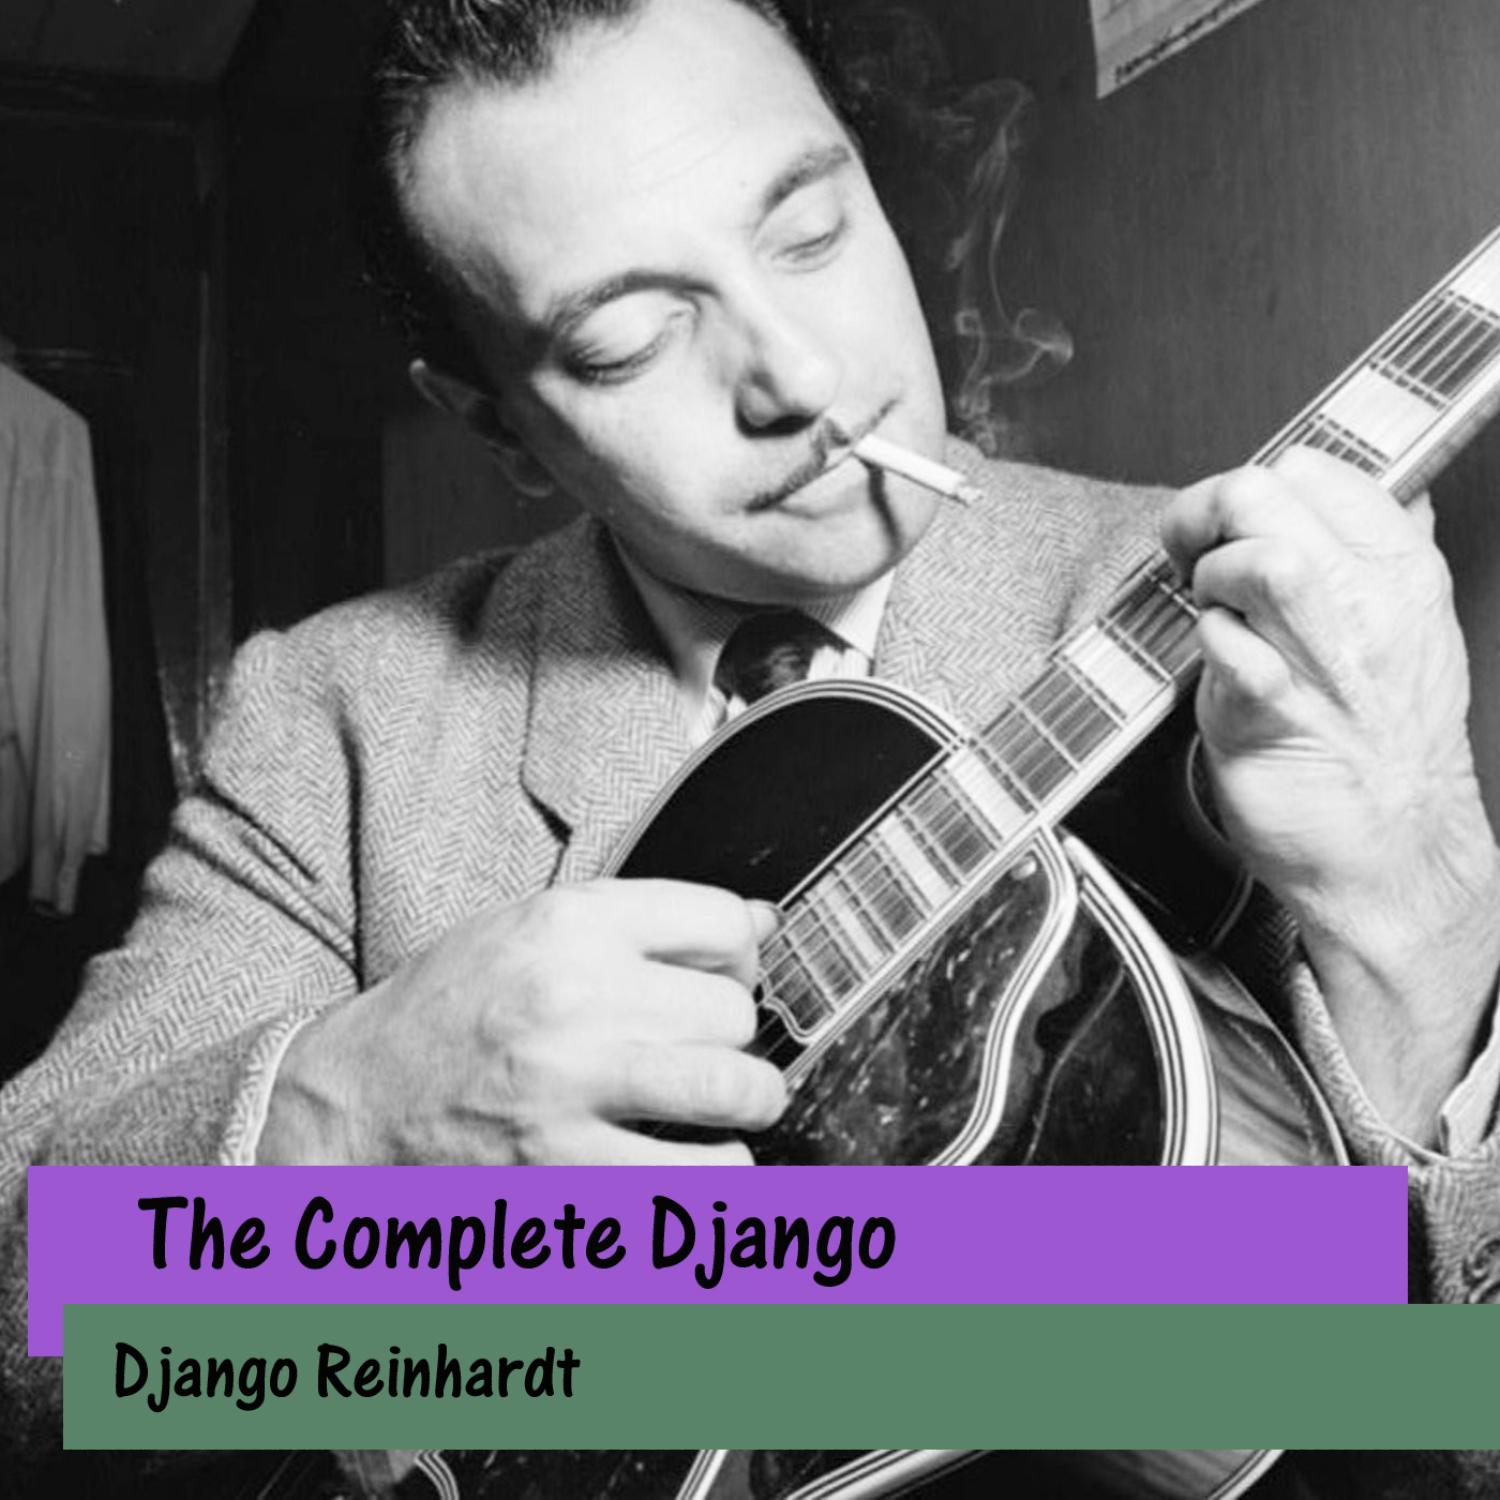 The Complete Django